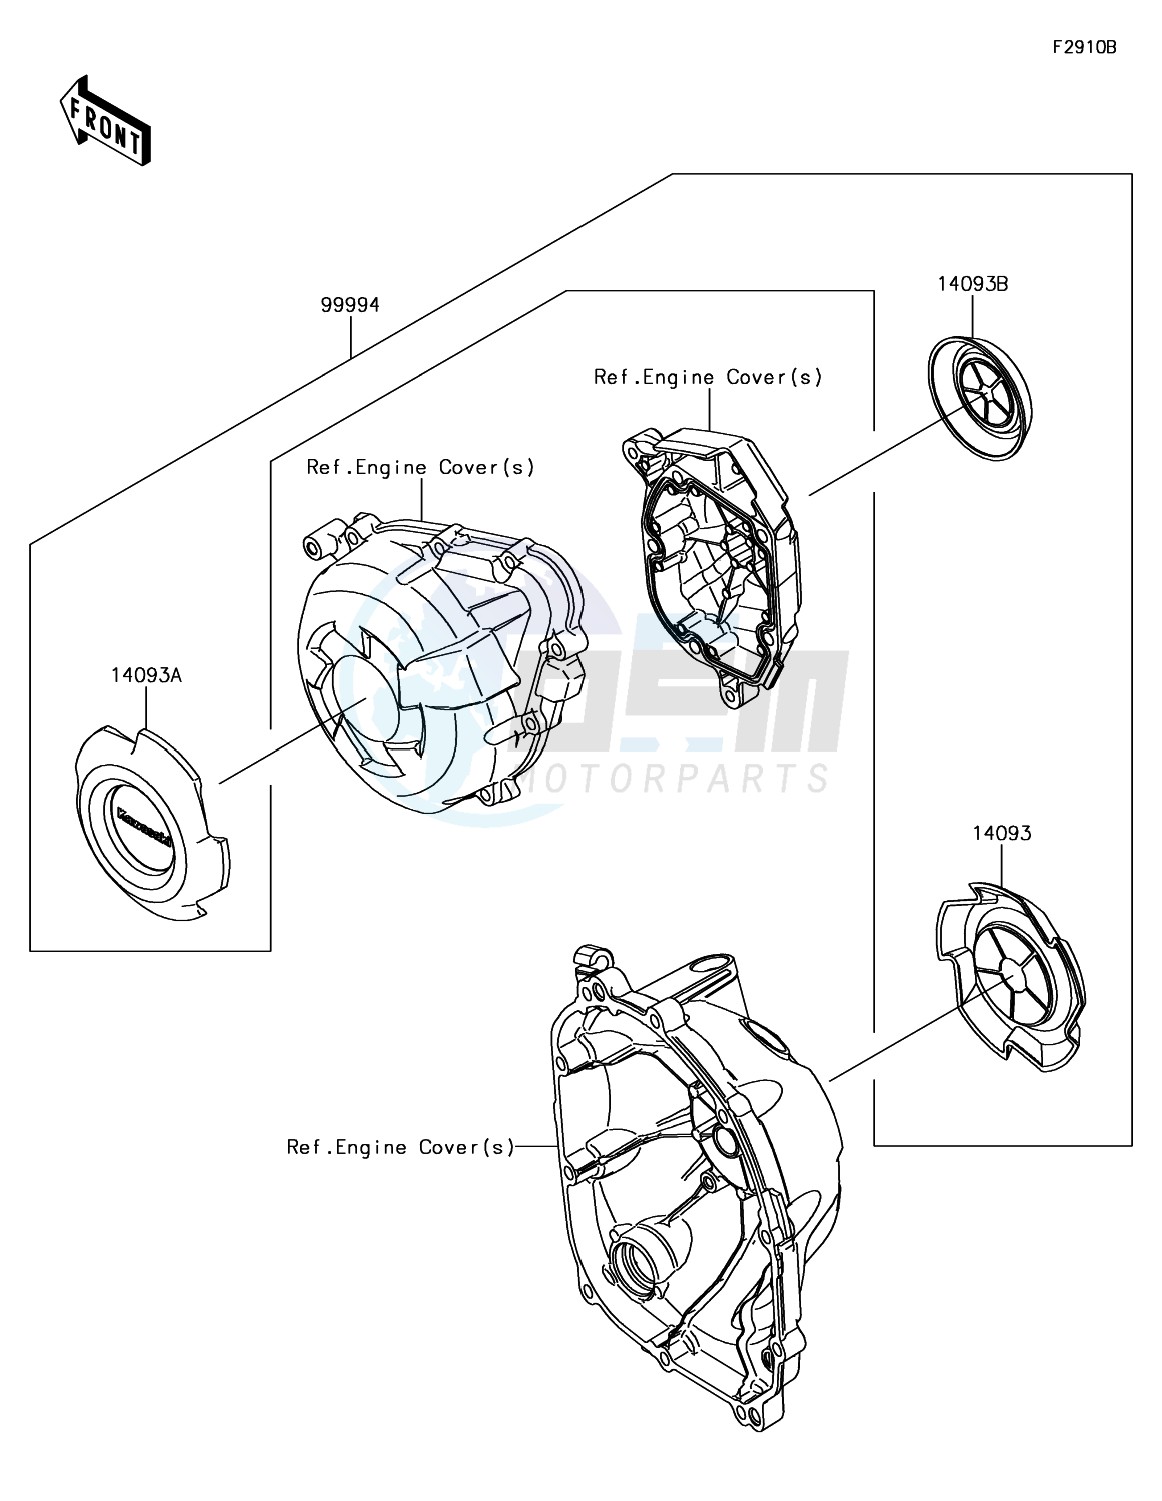 Accessory(Crankcase Ring) blueprint